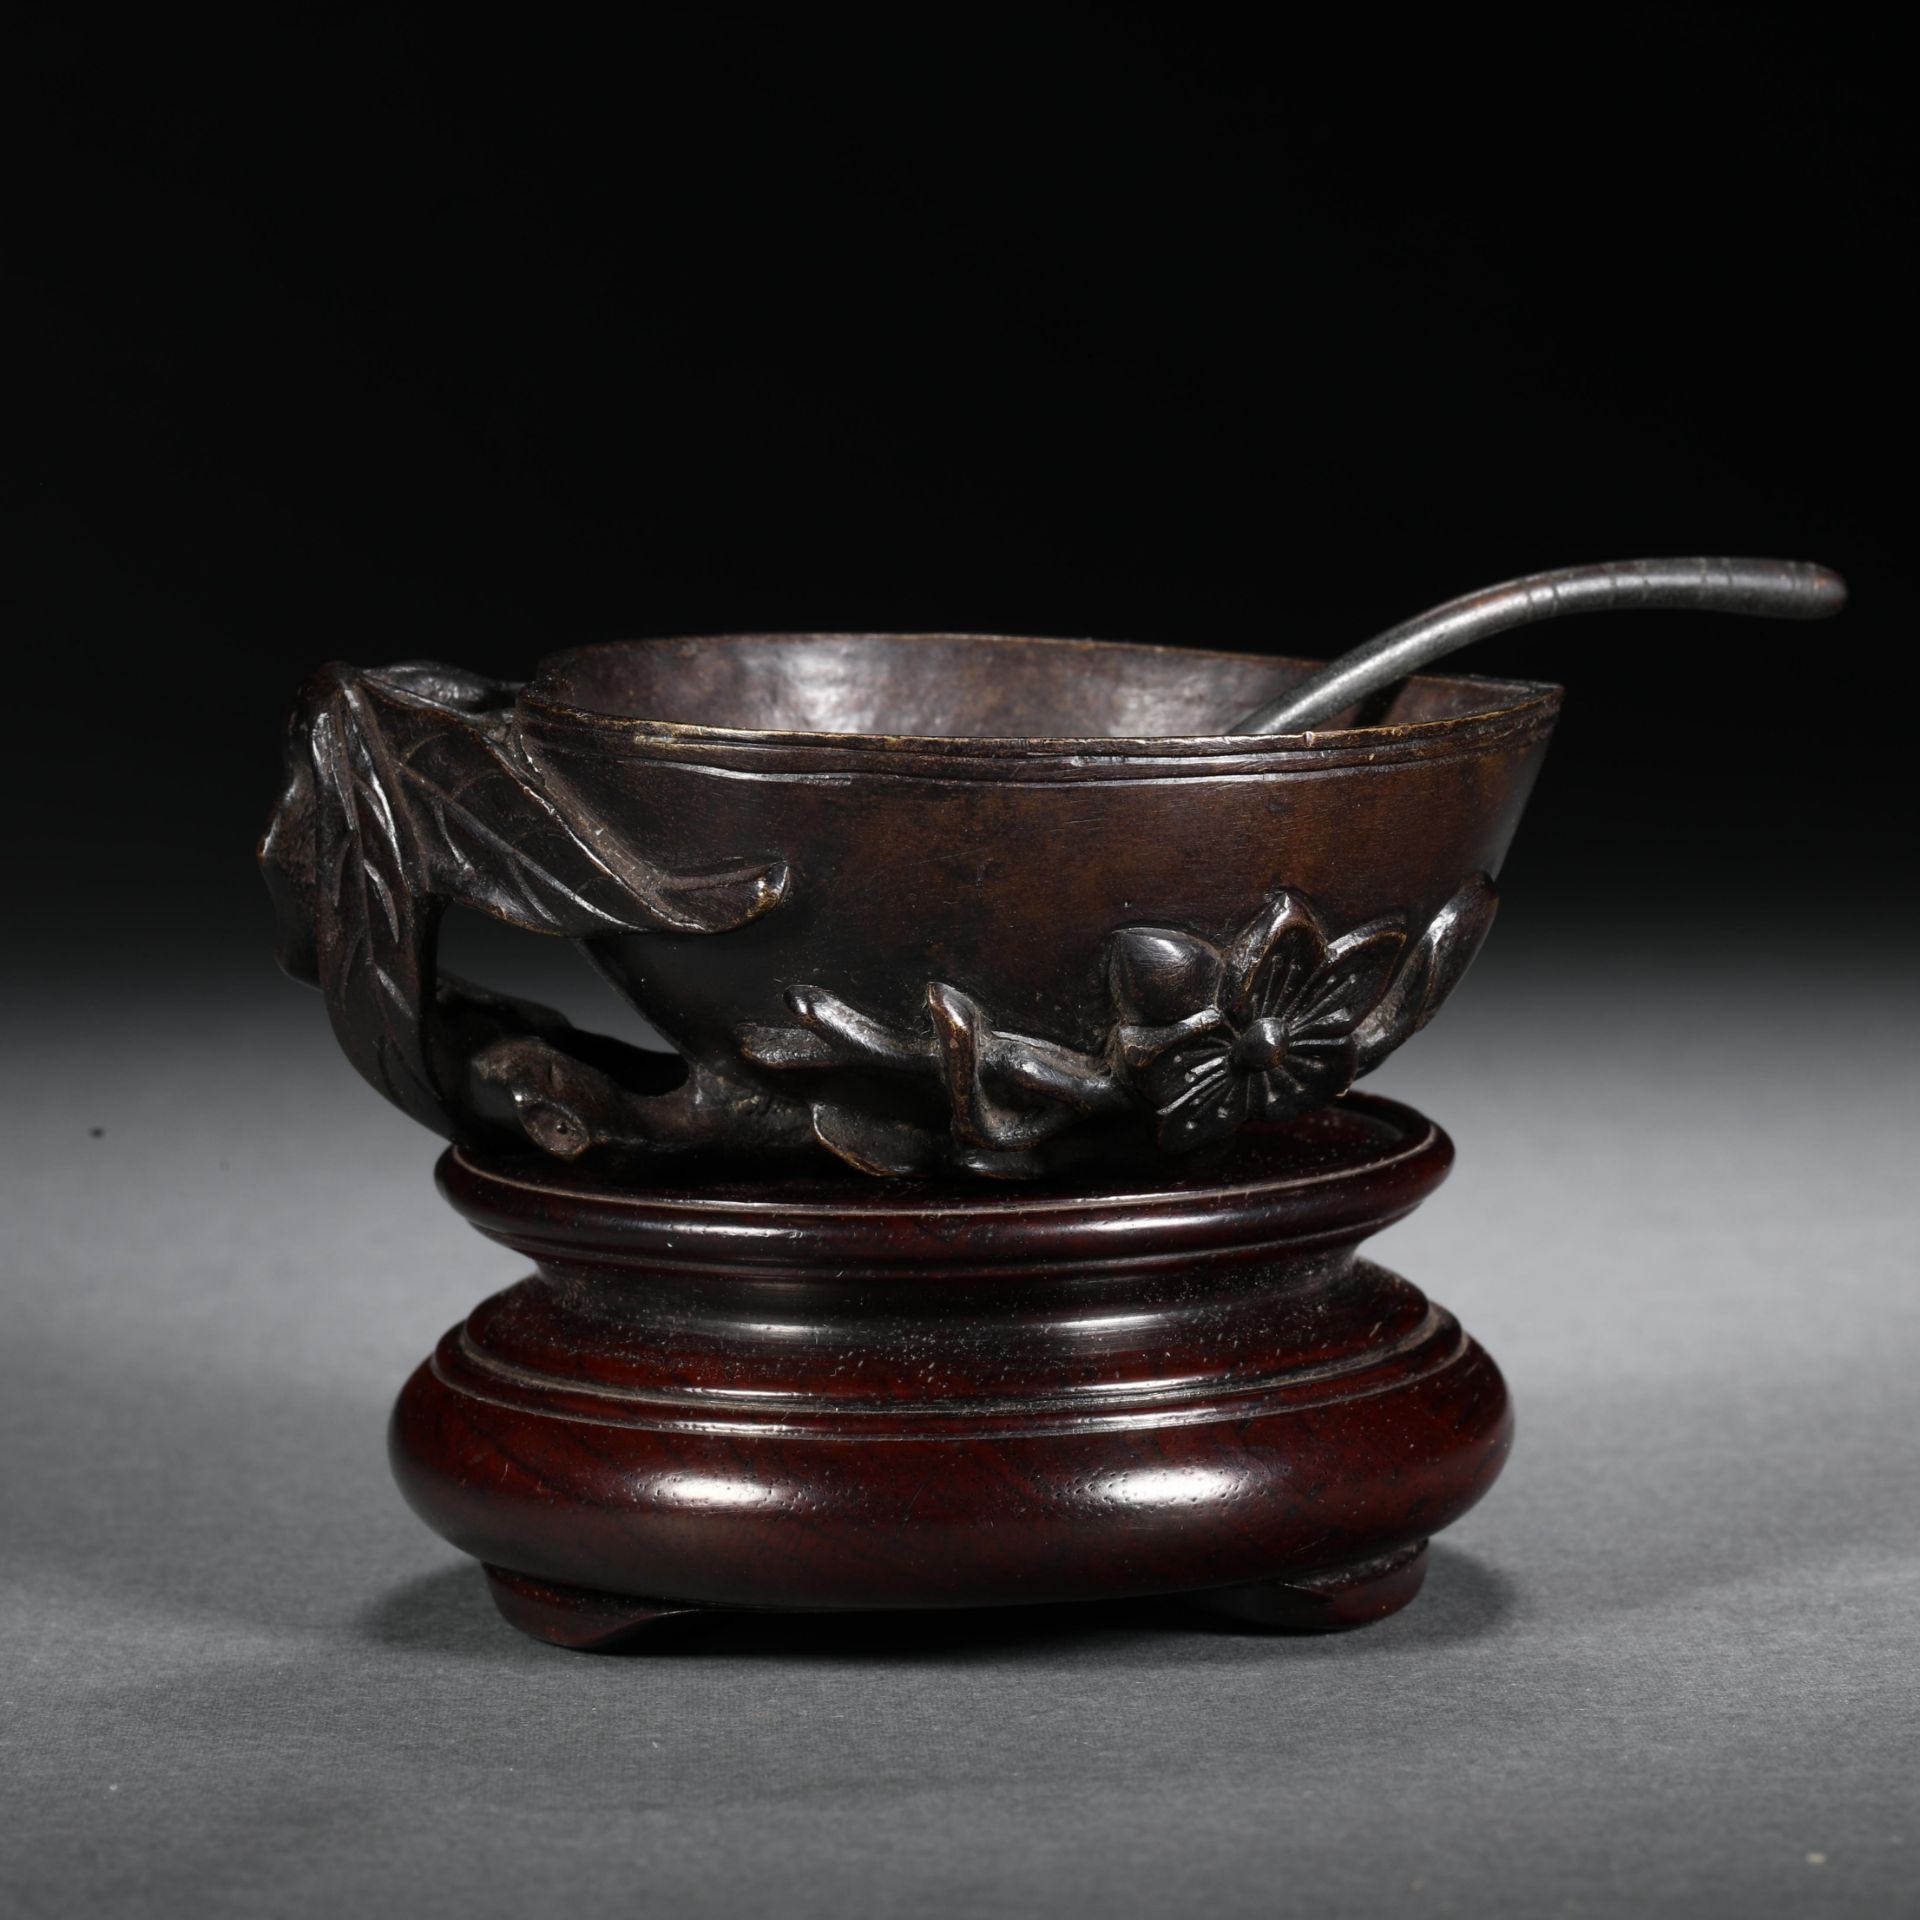 19th century copper peach-shaped water vessel